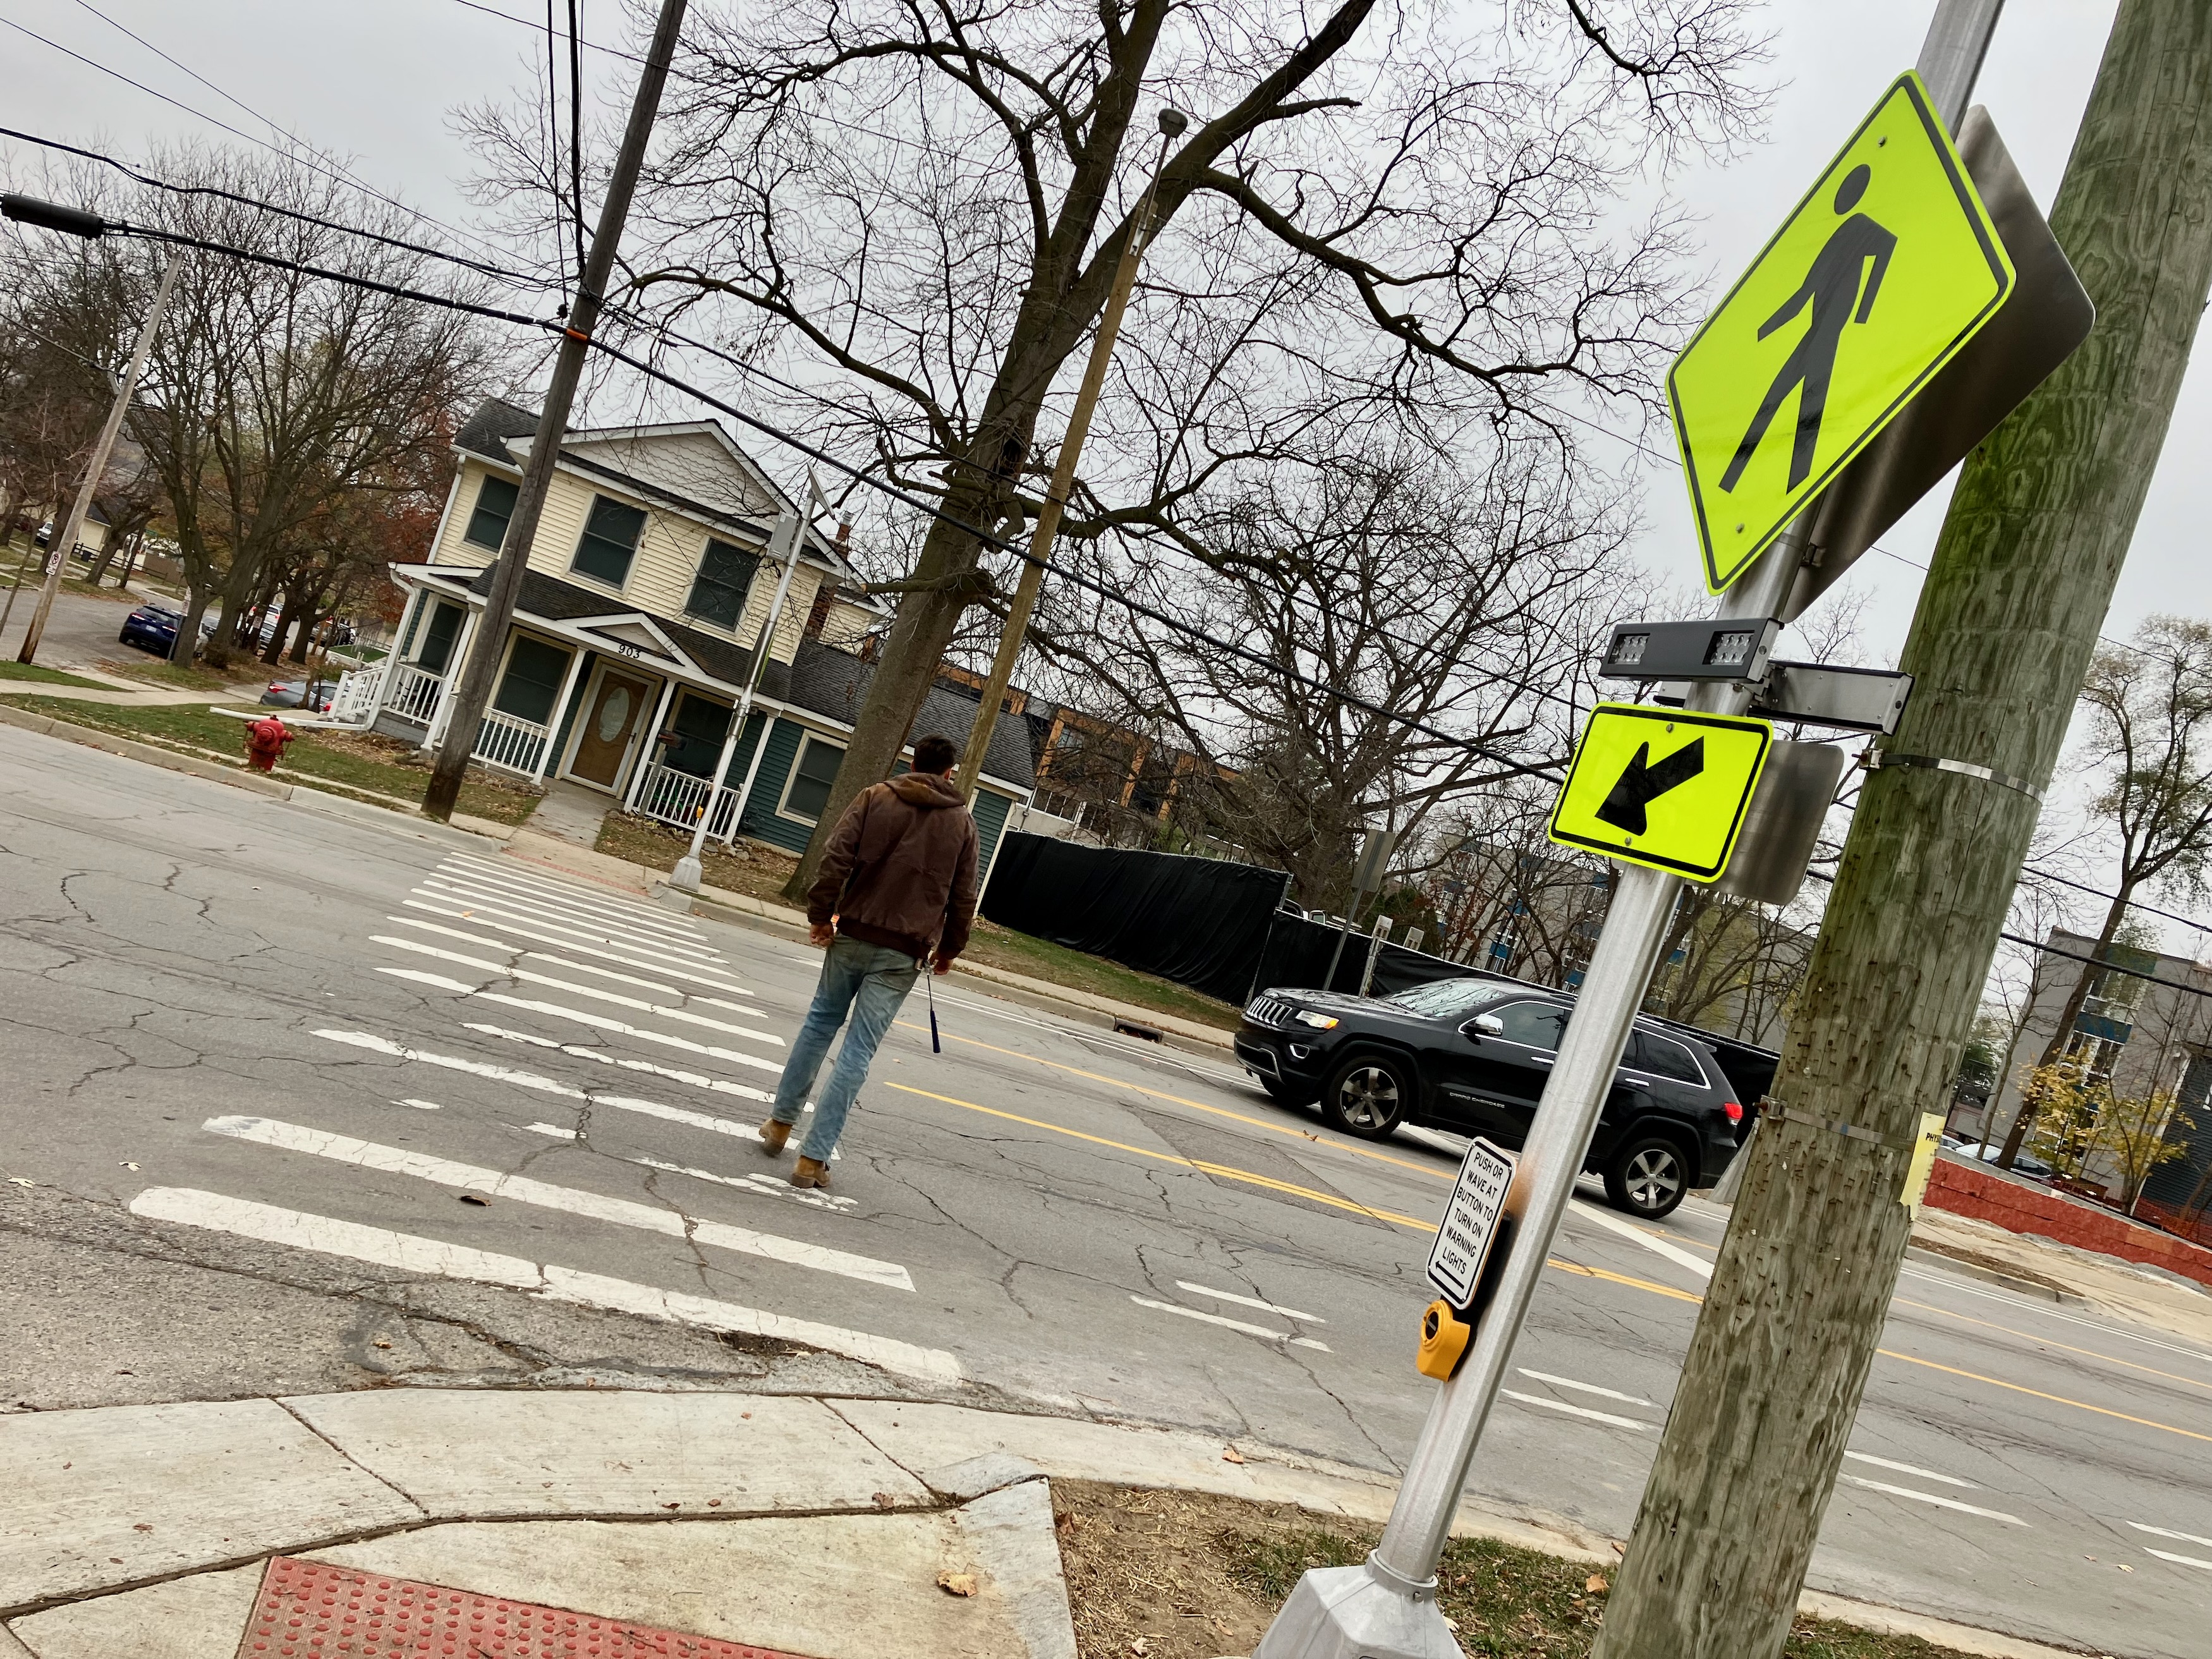 Pedestrian Crossing Sign - Get 10% Off Now